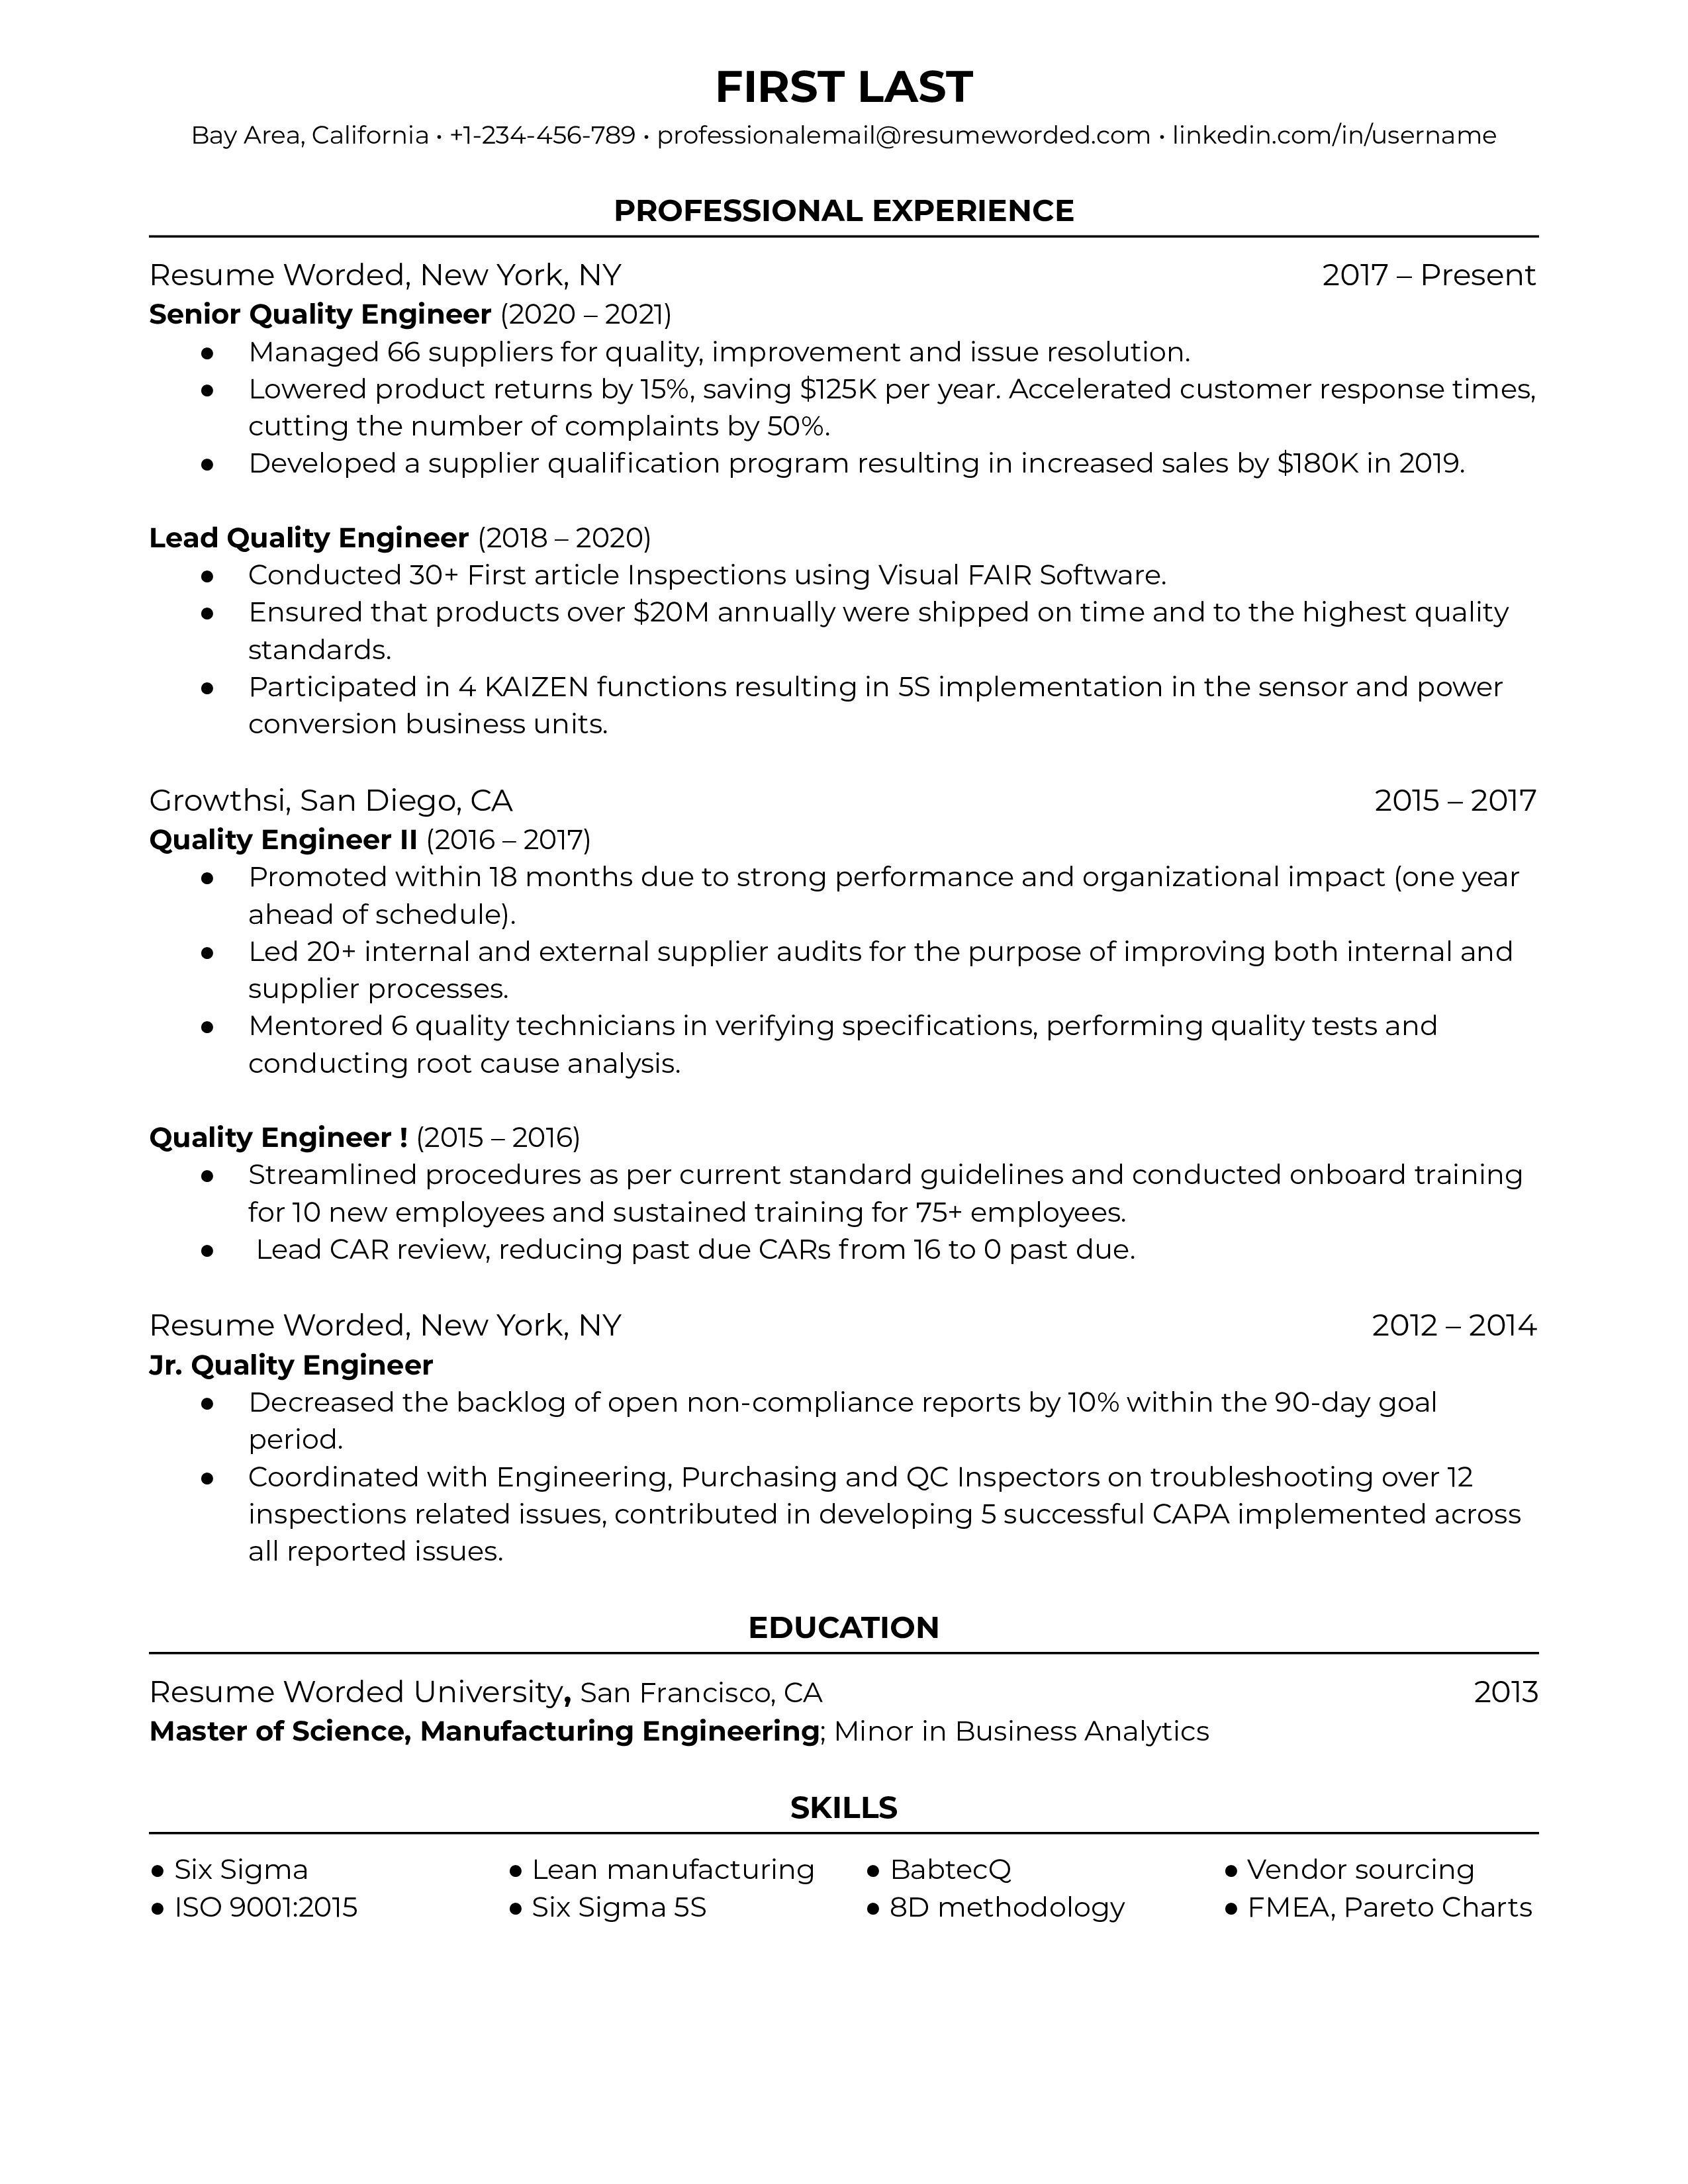 Senior Quality Engineer resume example for 2023 job hunters